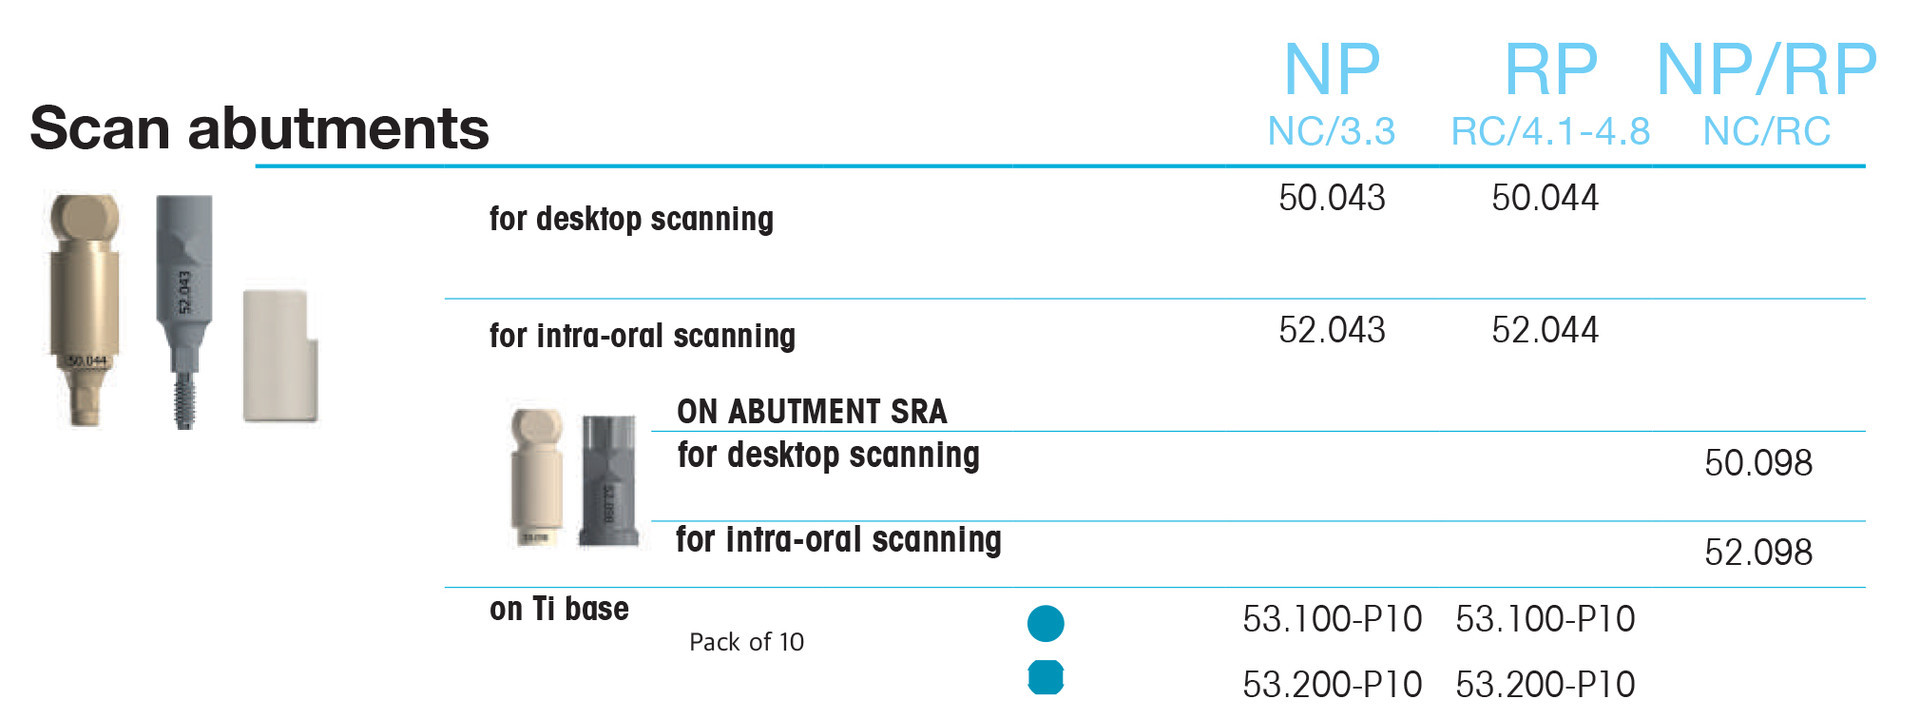 Scan abutment for desktop scanning NP NC/3.3